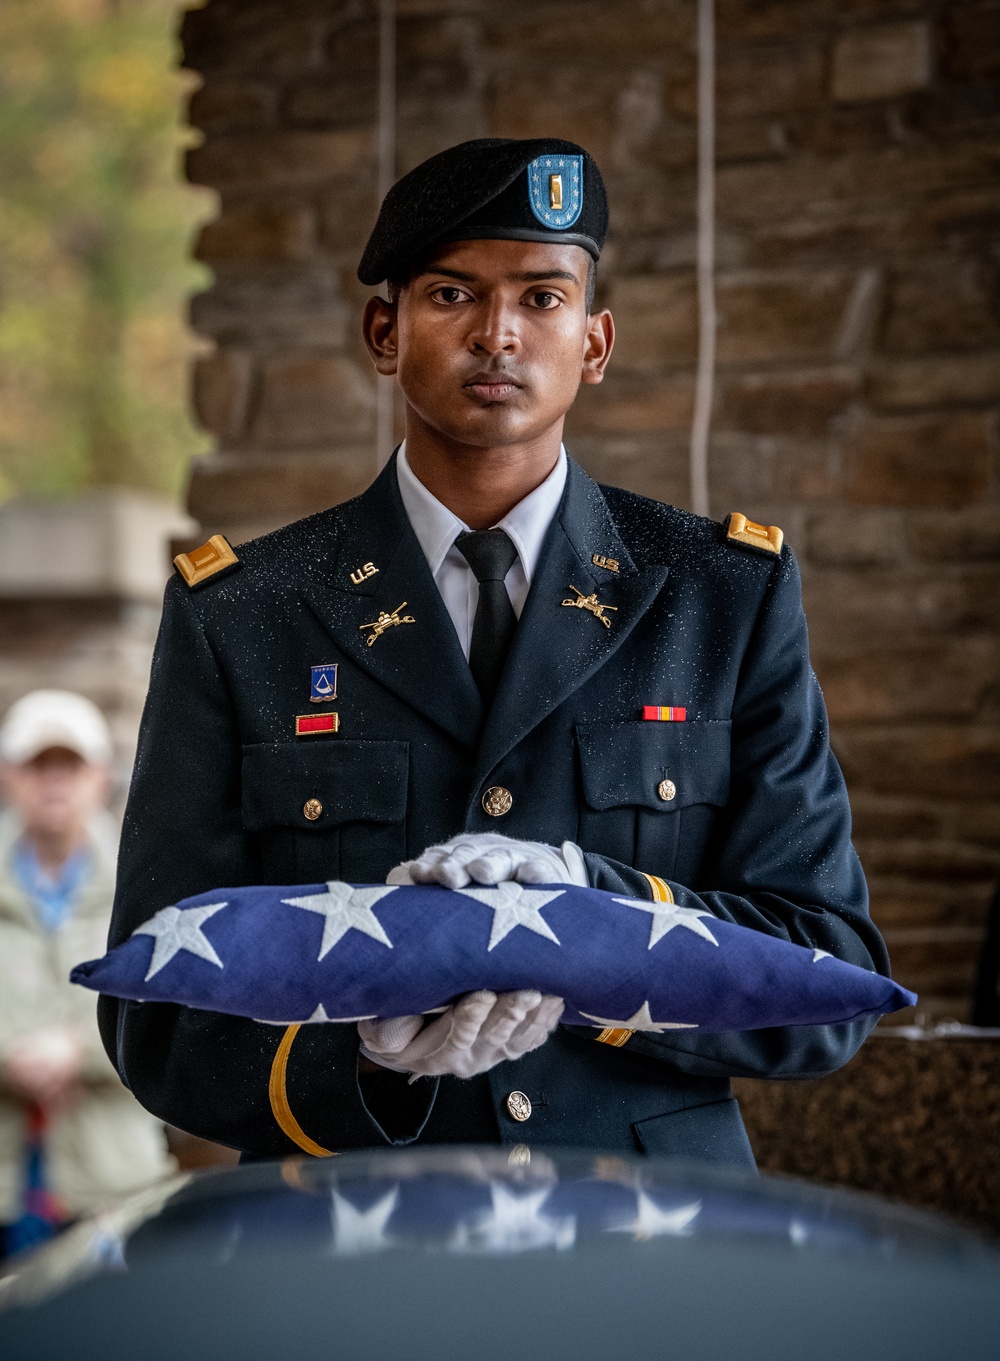 W.Va. Guard honors Civil War Medal of Honor recipient during reburial ceremony